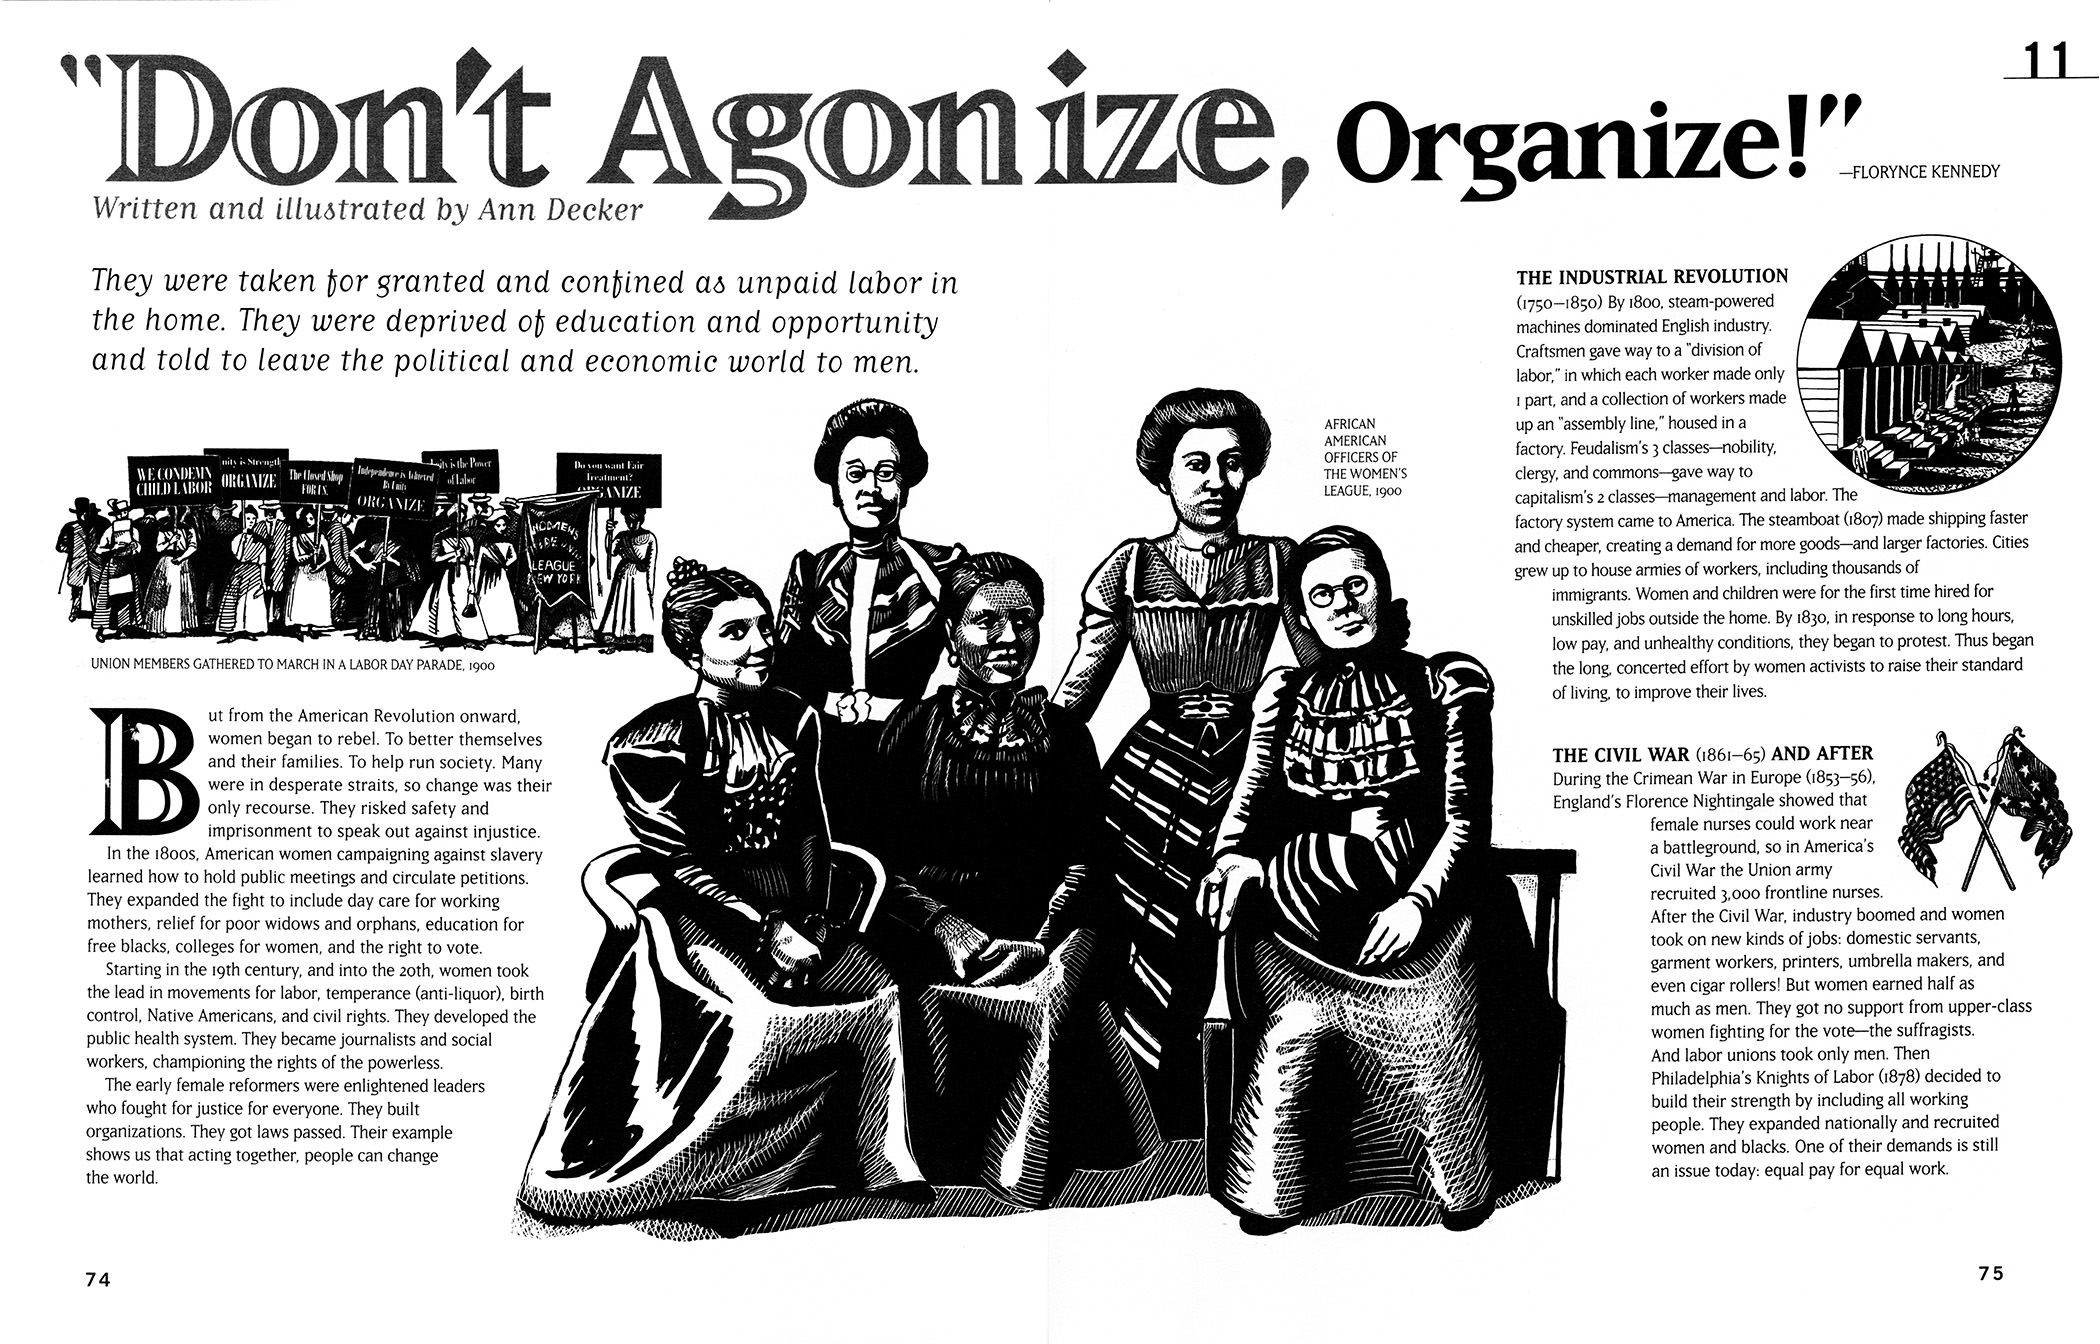 Don't Agonize, Organize - p1-2 - Ann Decker